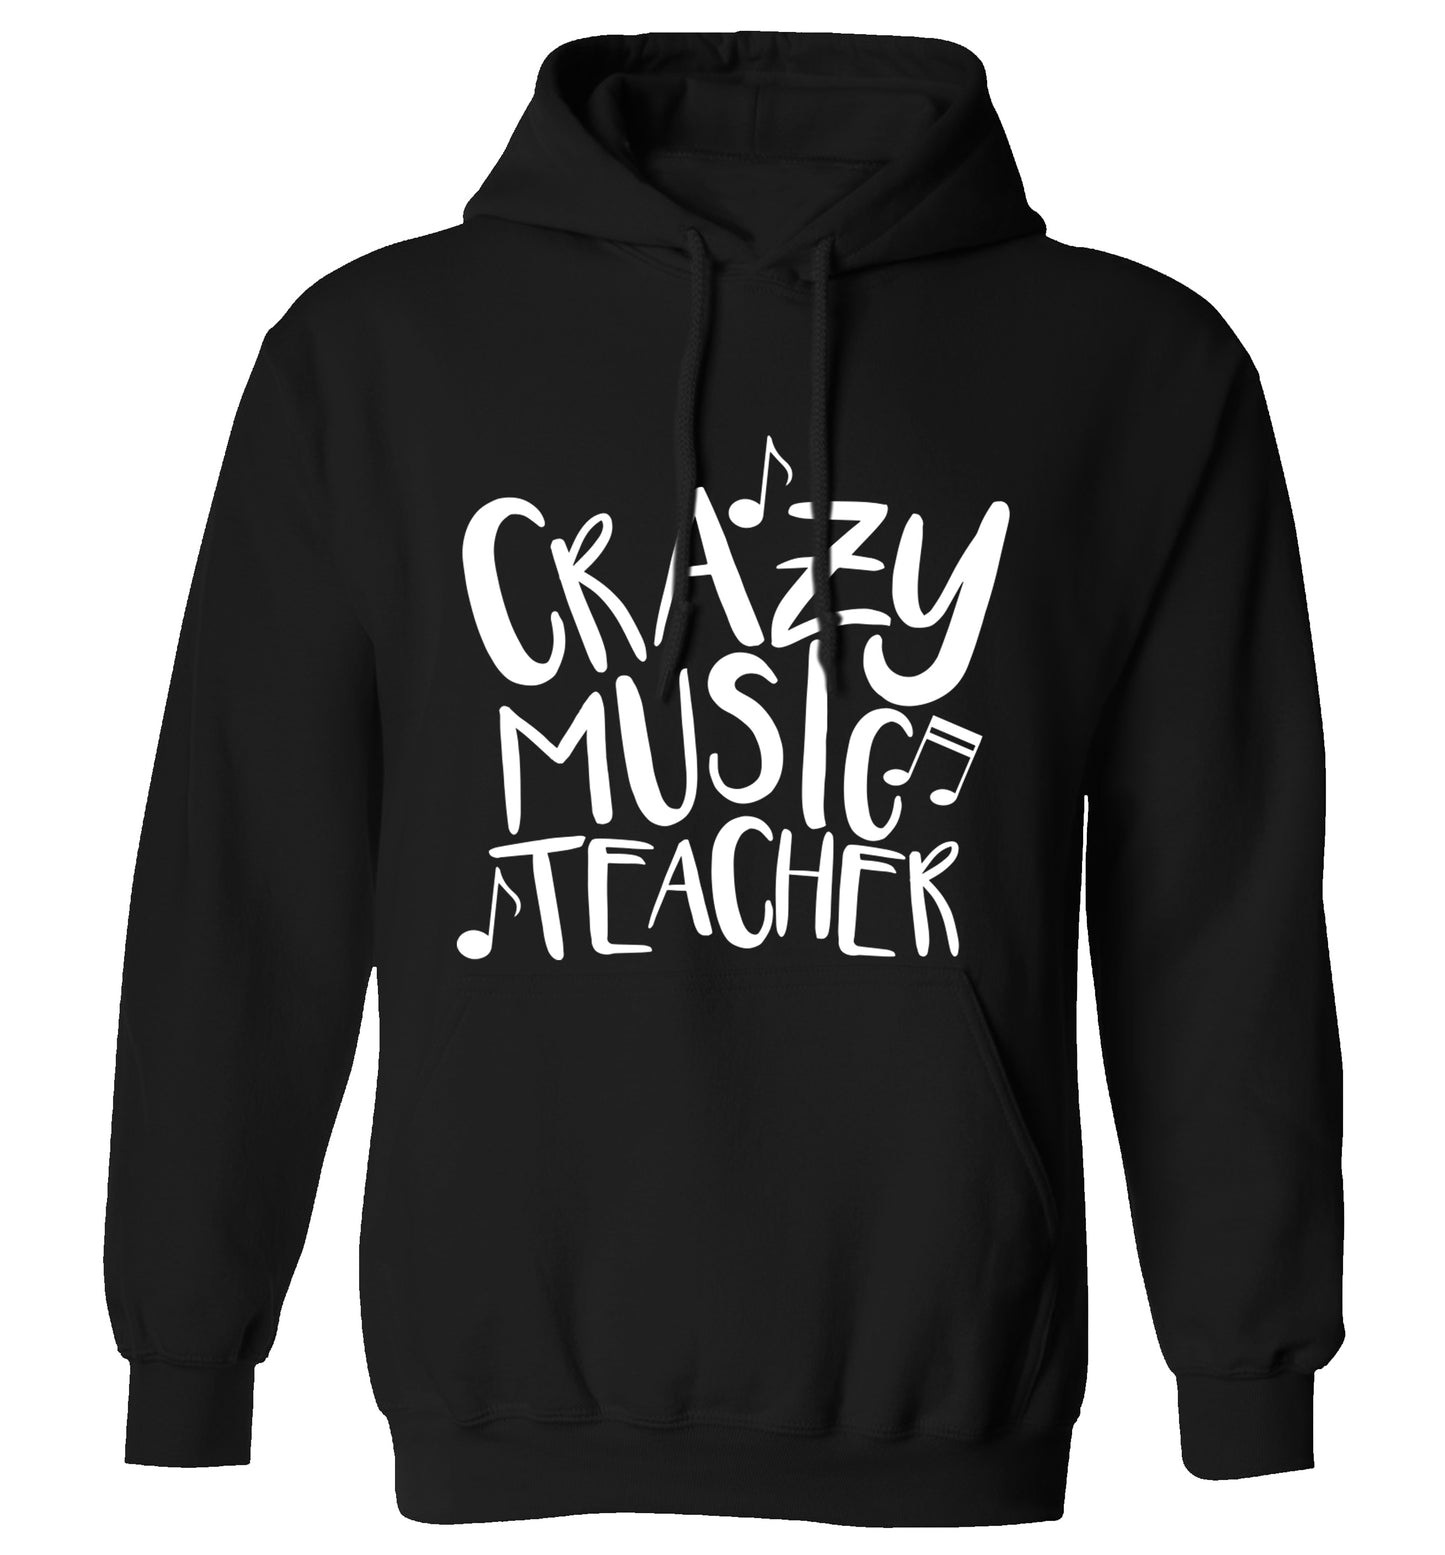 Crazy music teacher adults unisex black hoodie 2XL